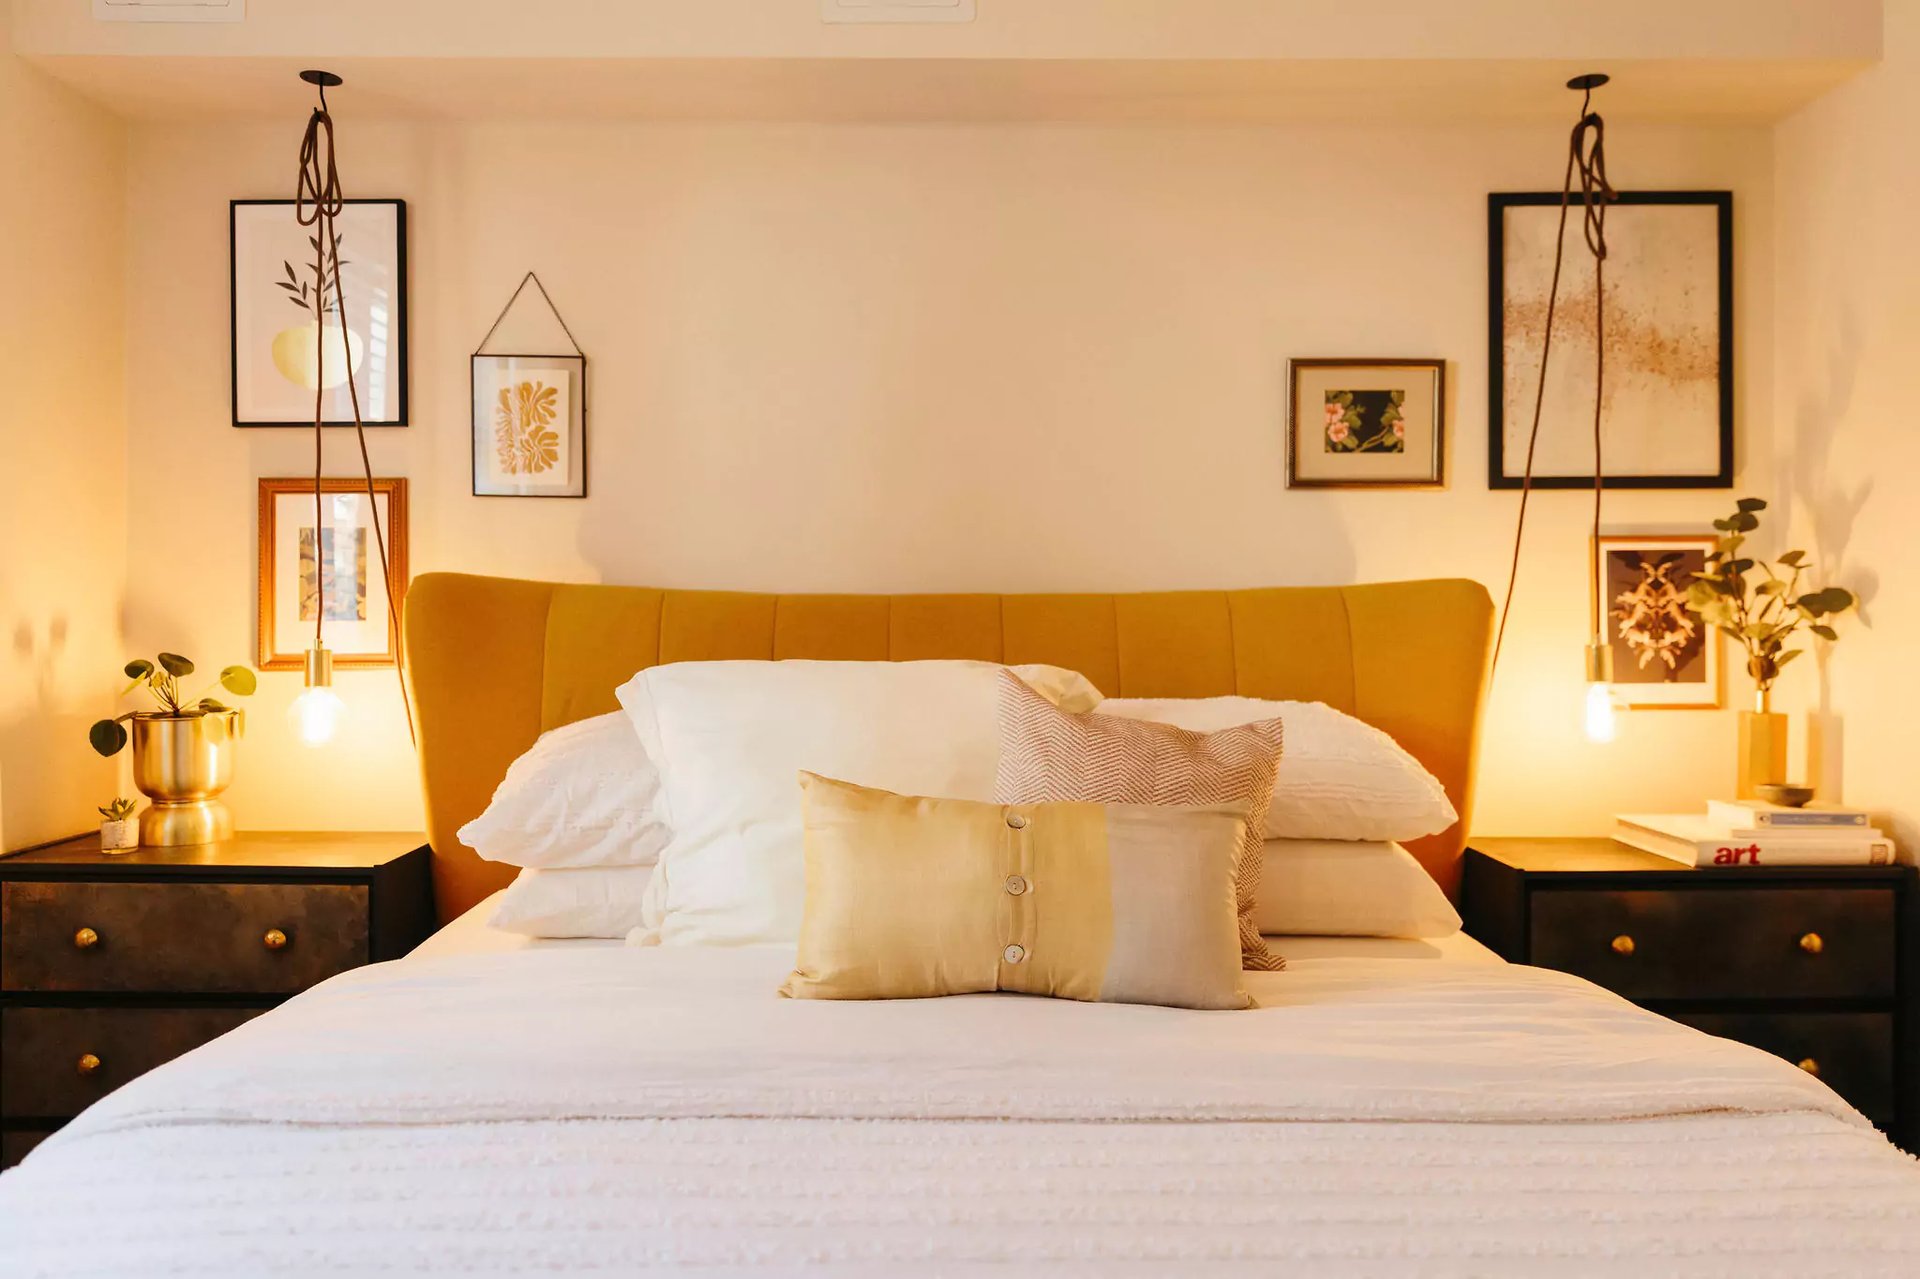 Warm neutral bedroom with yellow headboard